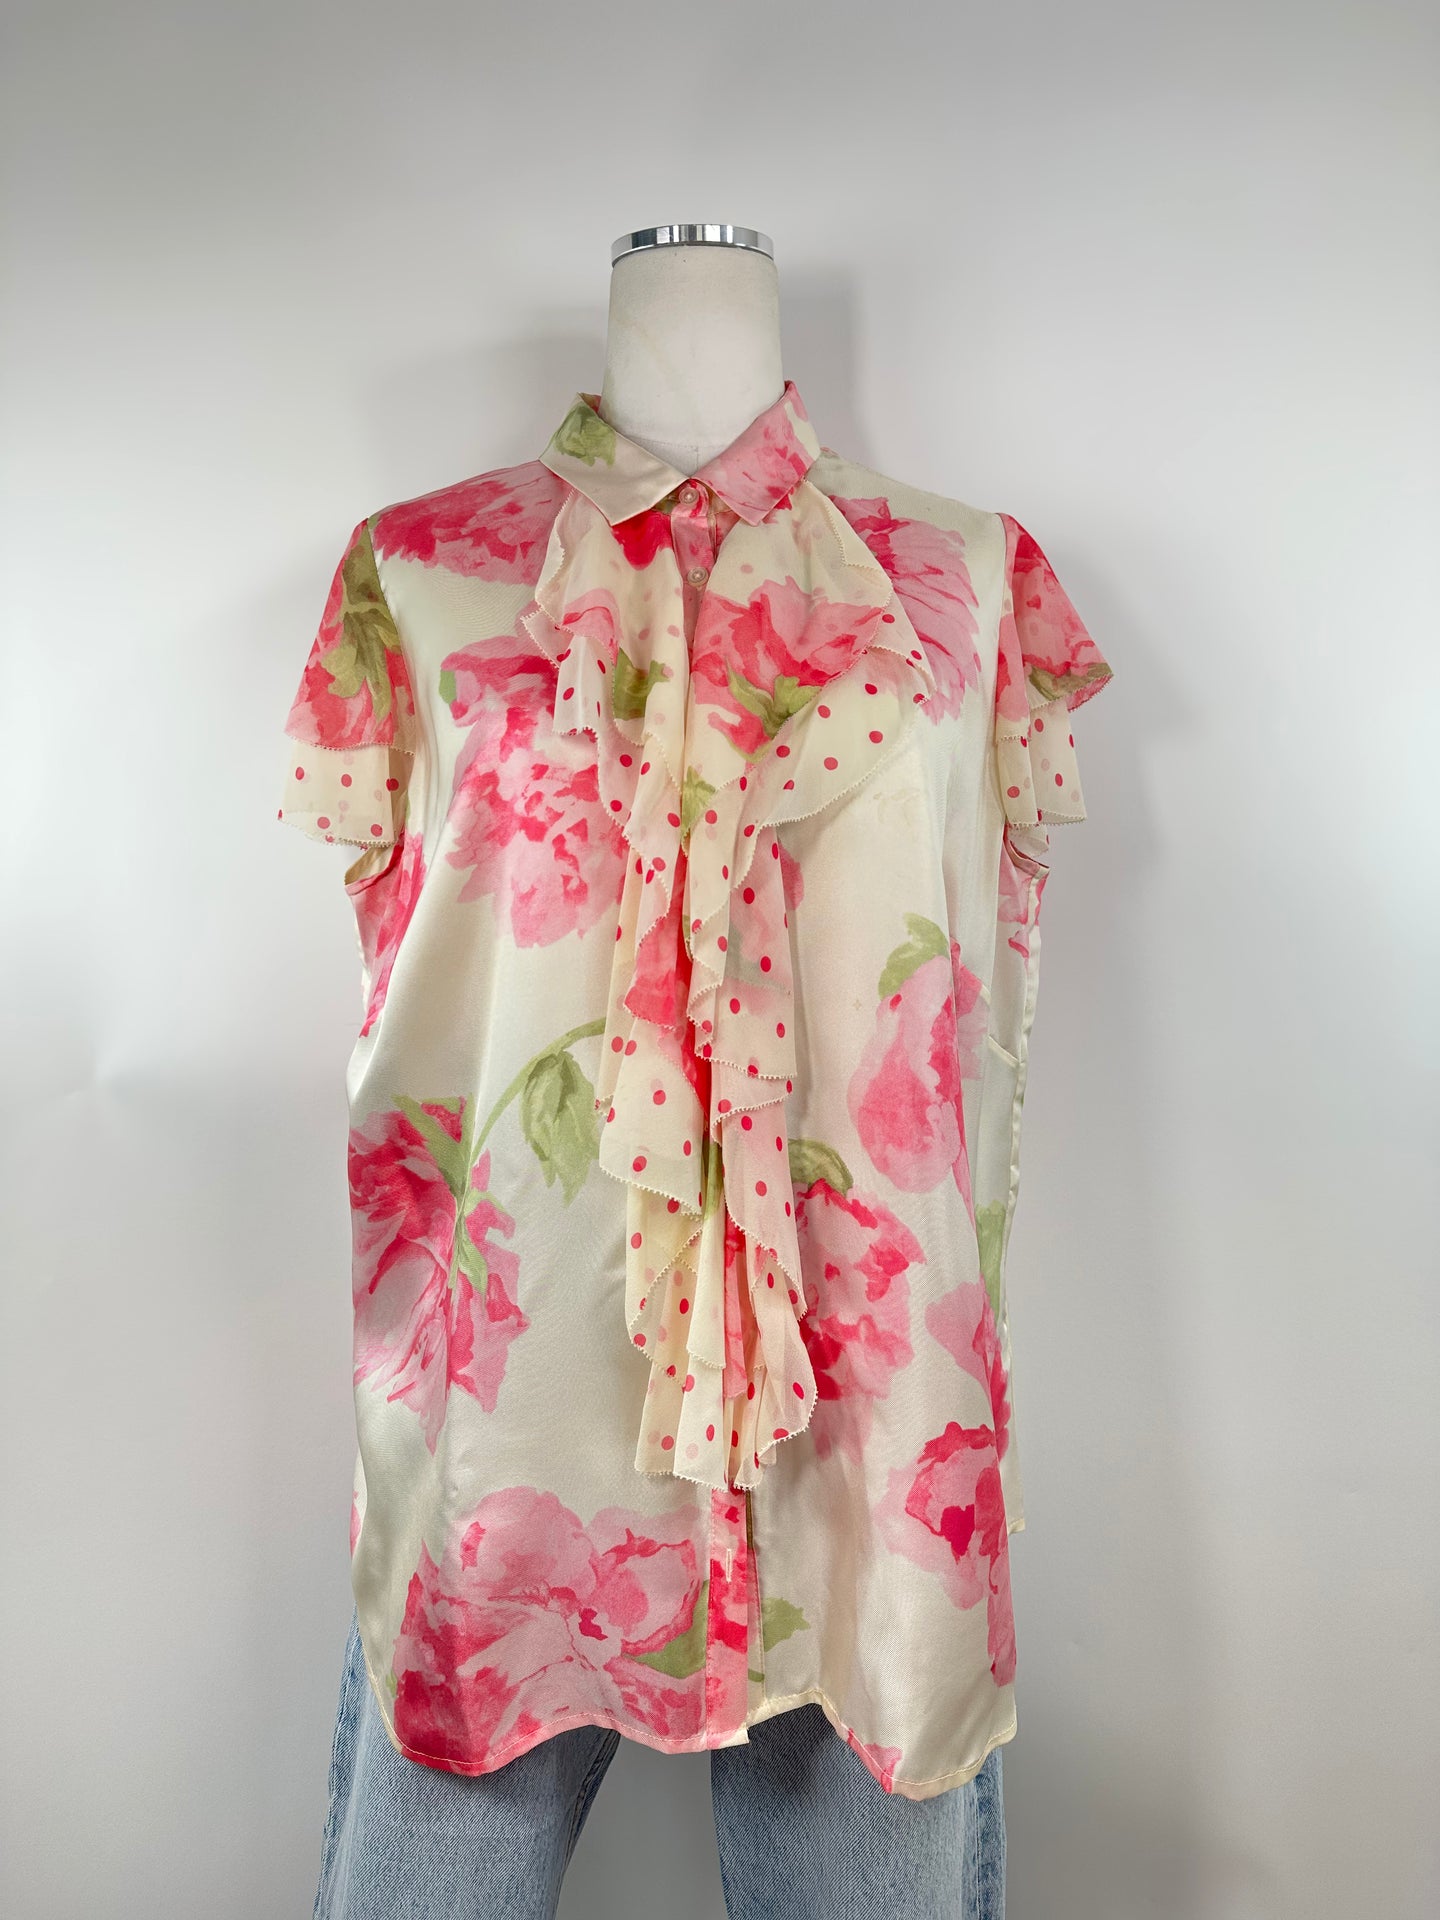 Liz Claiborne Silk Floral Top